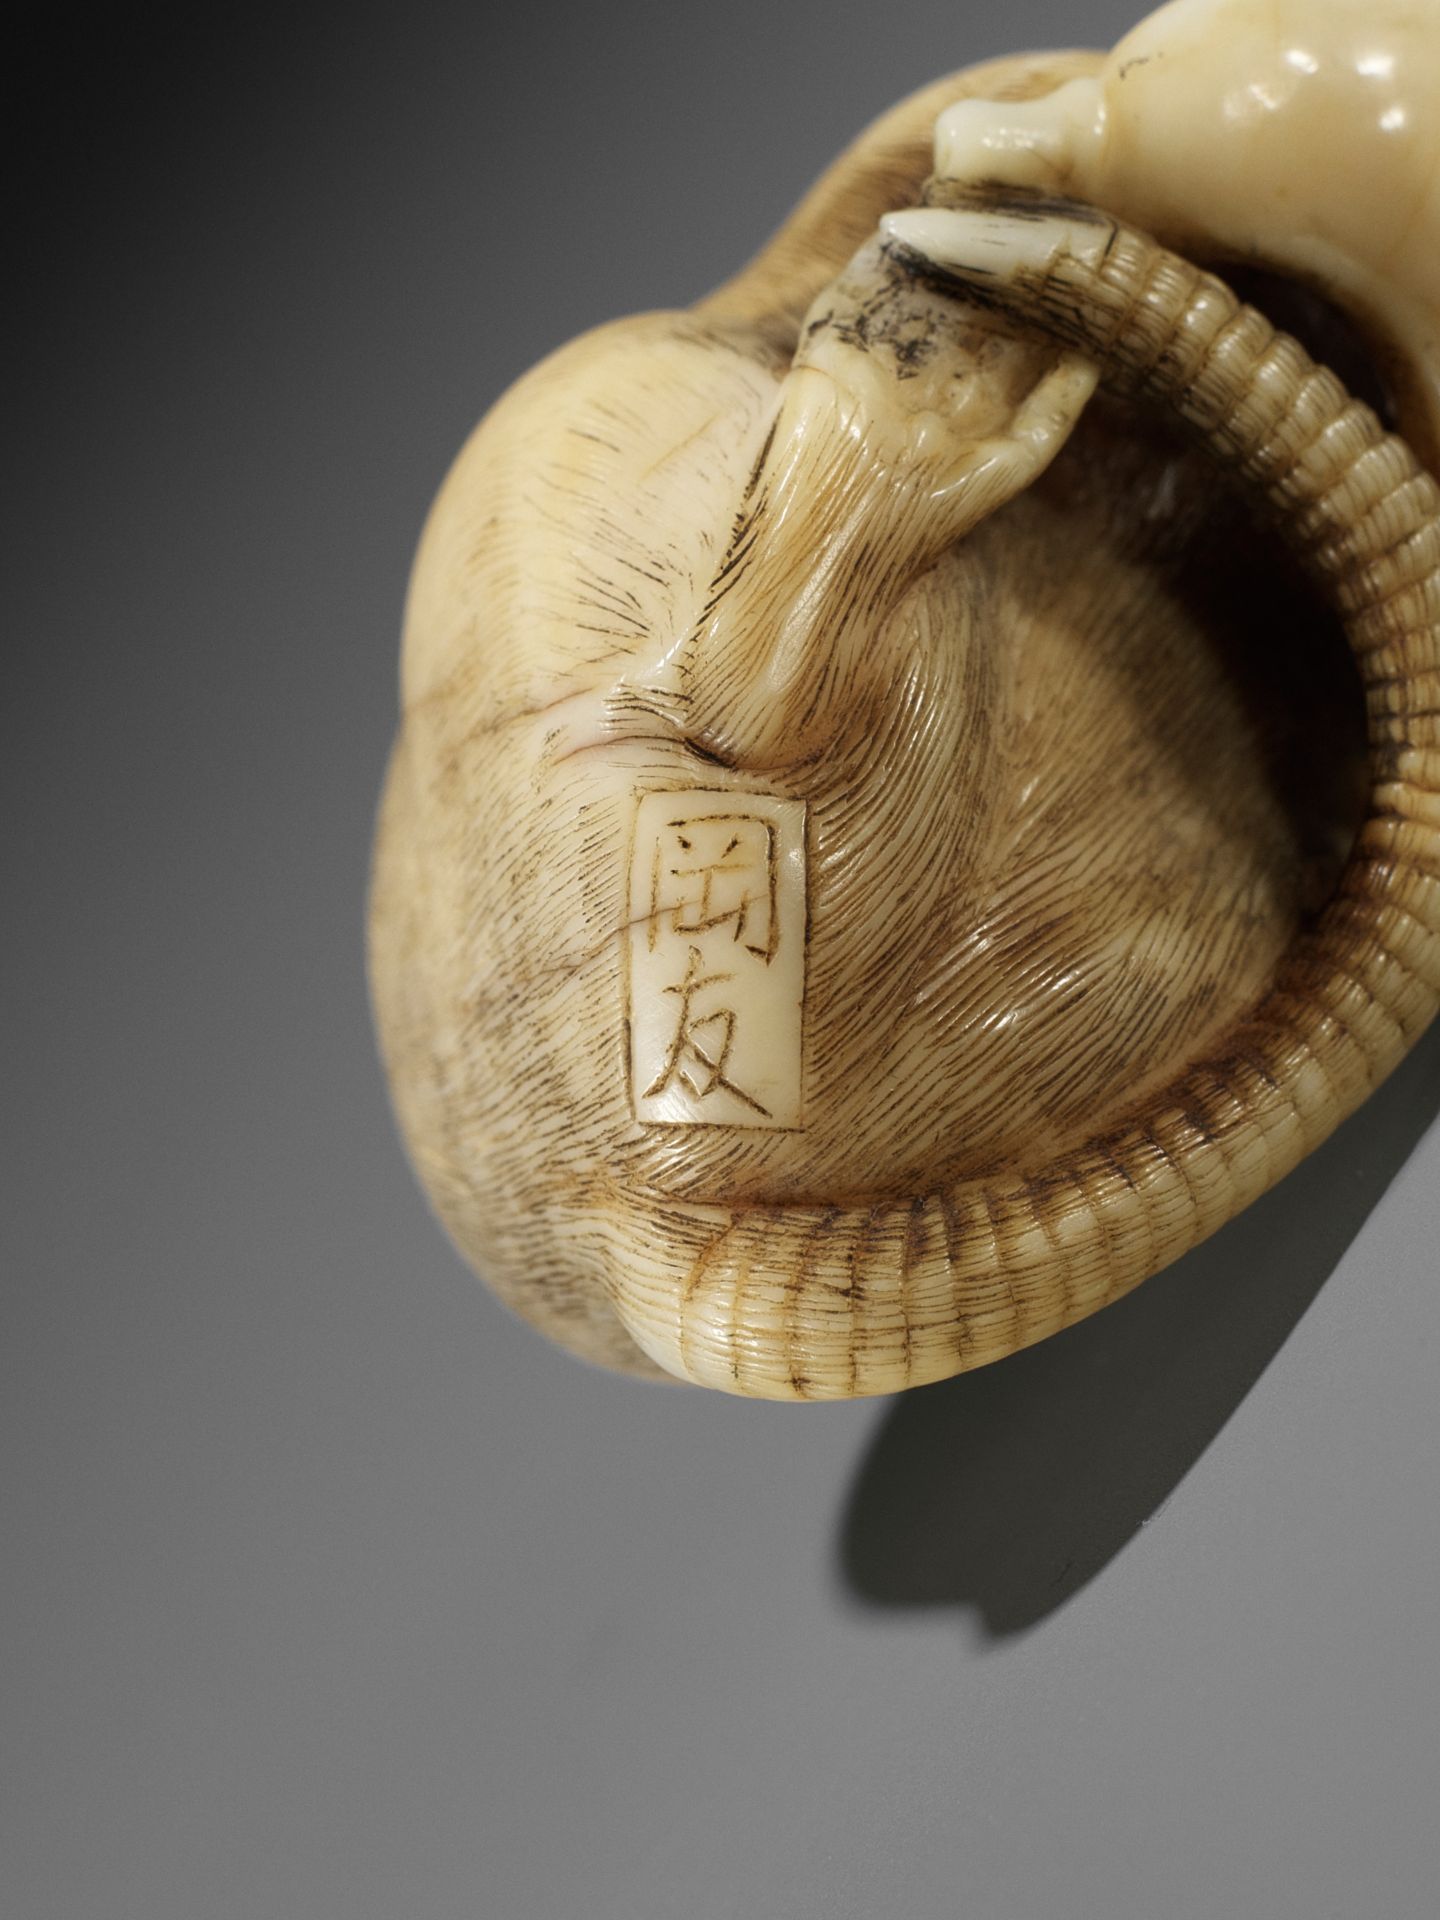 OKATOMO: A SUPERB IVORY NETSUKE OF A RAT WITH EDAMAME BEAN POD - Image 14 of 15